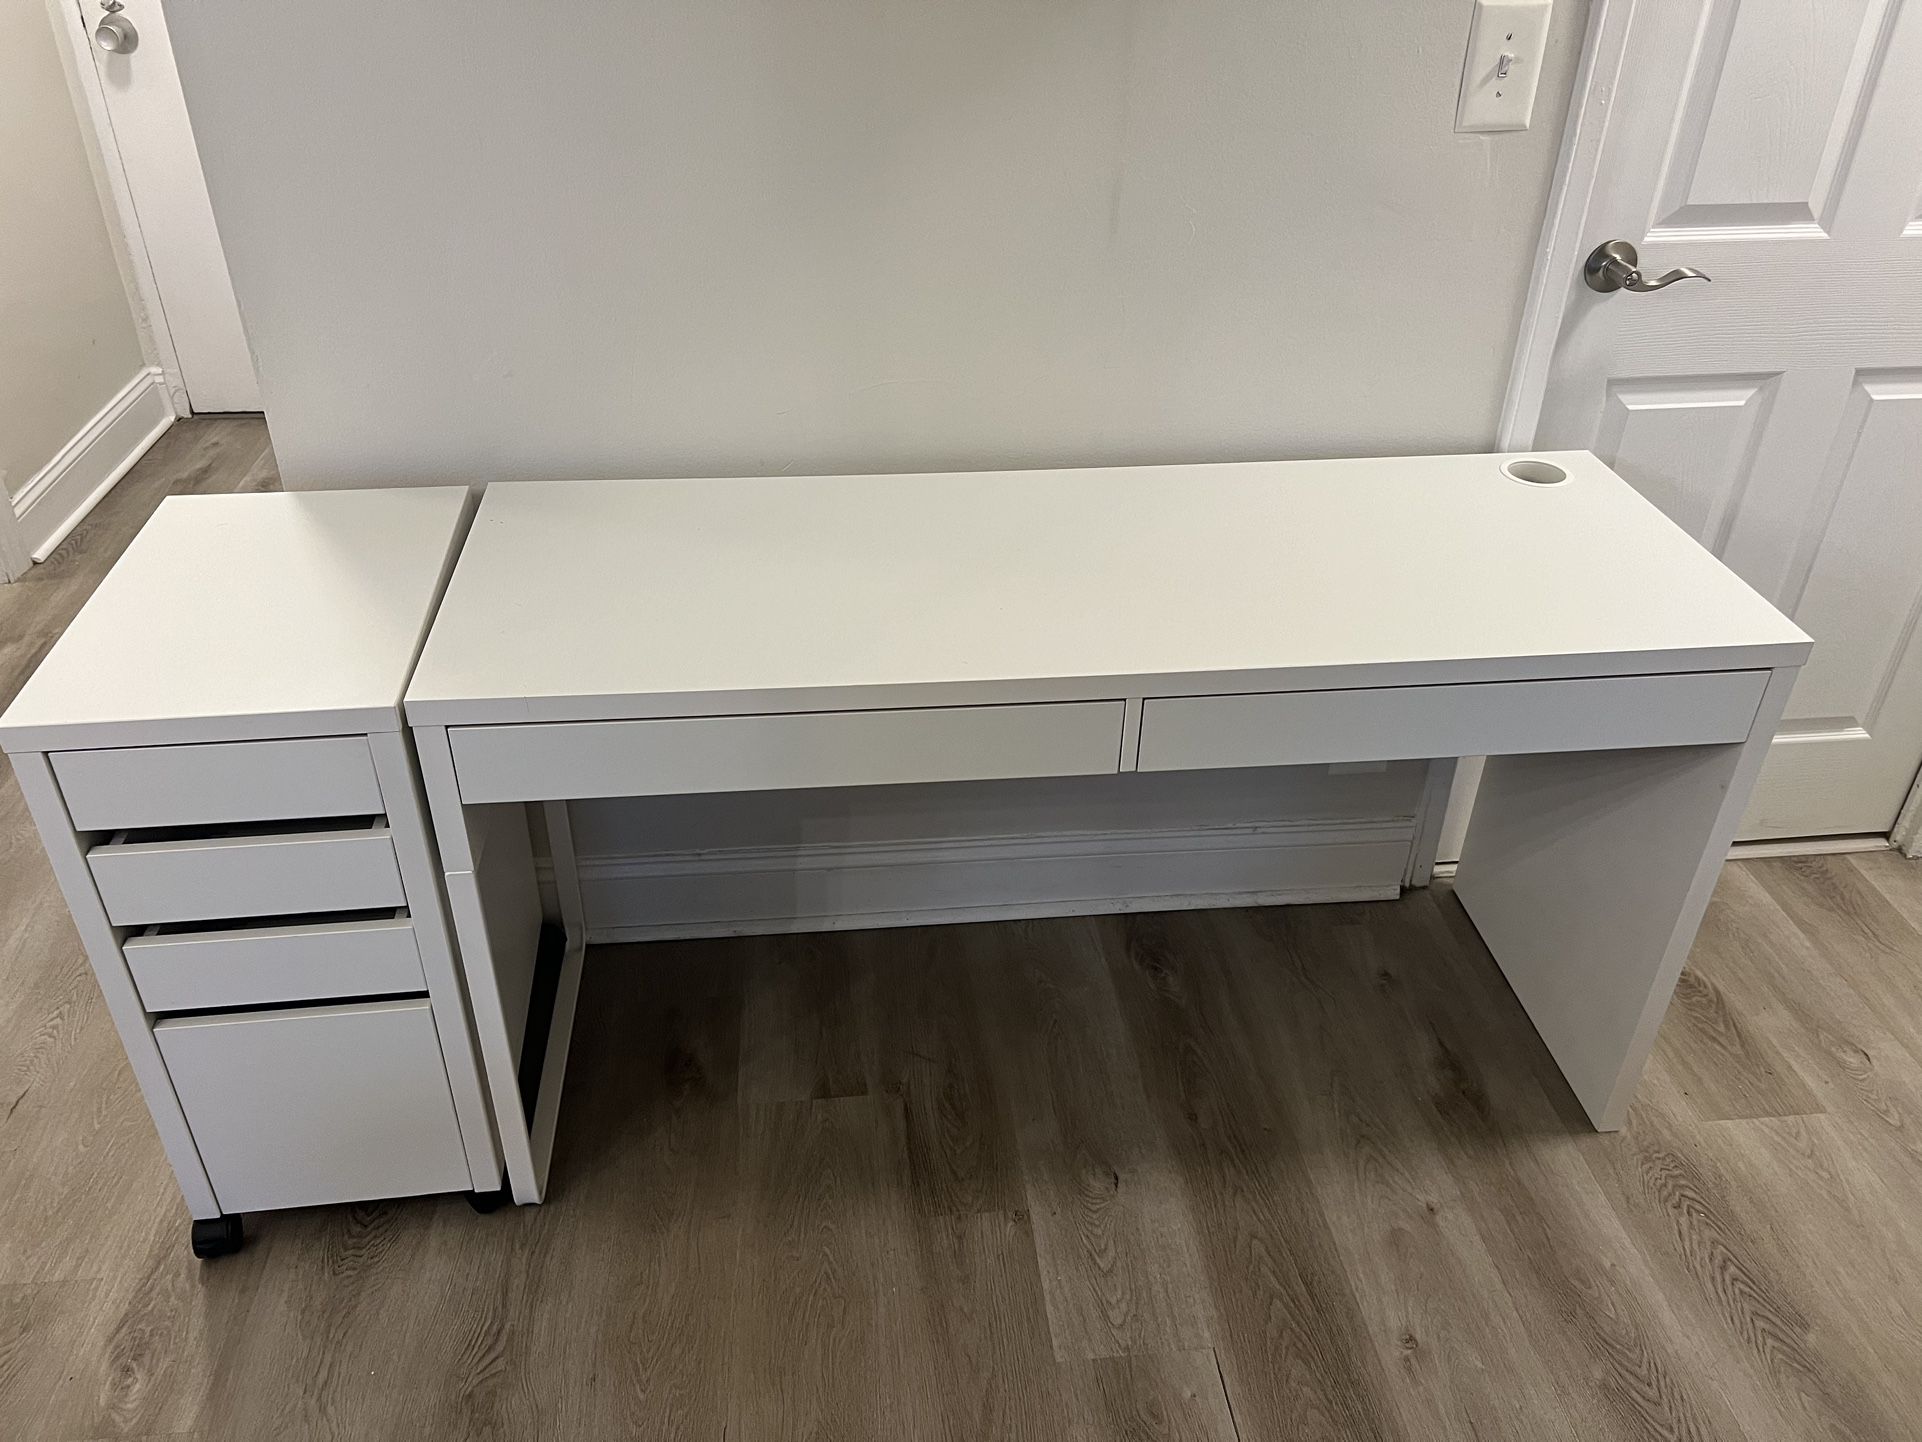 IKEA Desk & Drawer Unit